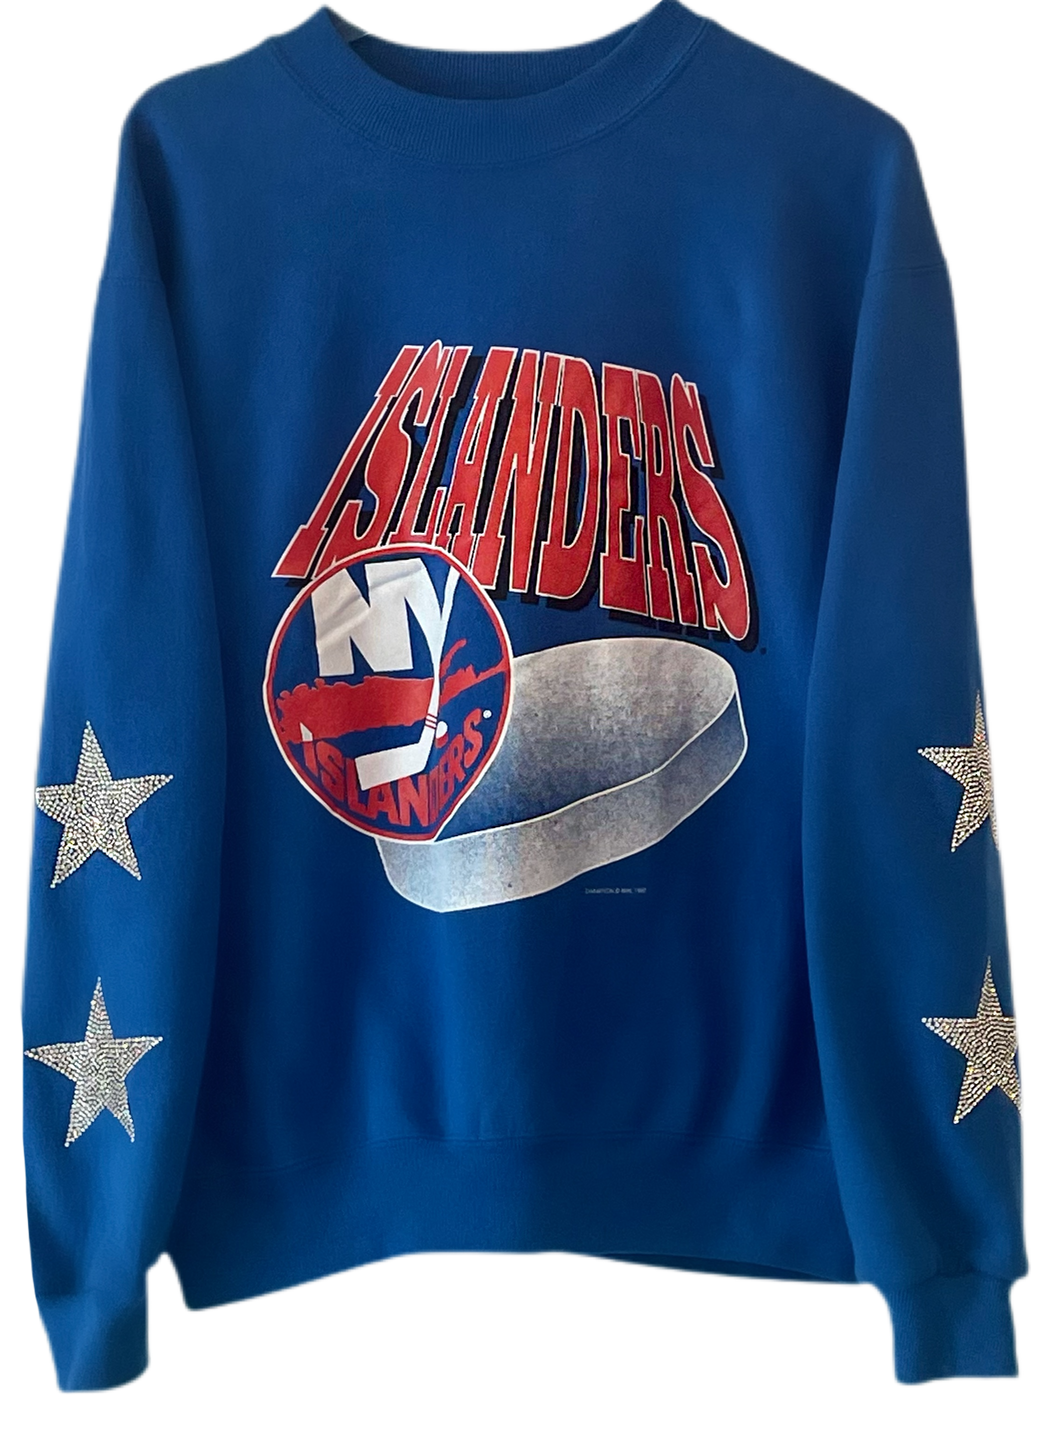 ShopCrystalRags NY Islanders, NHL One of A Kind Vintage Sweatshirt with Crystal Star Design